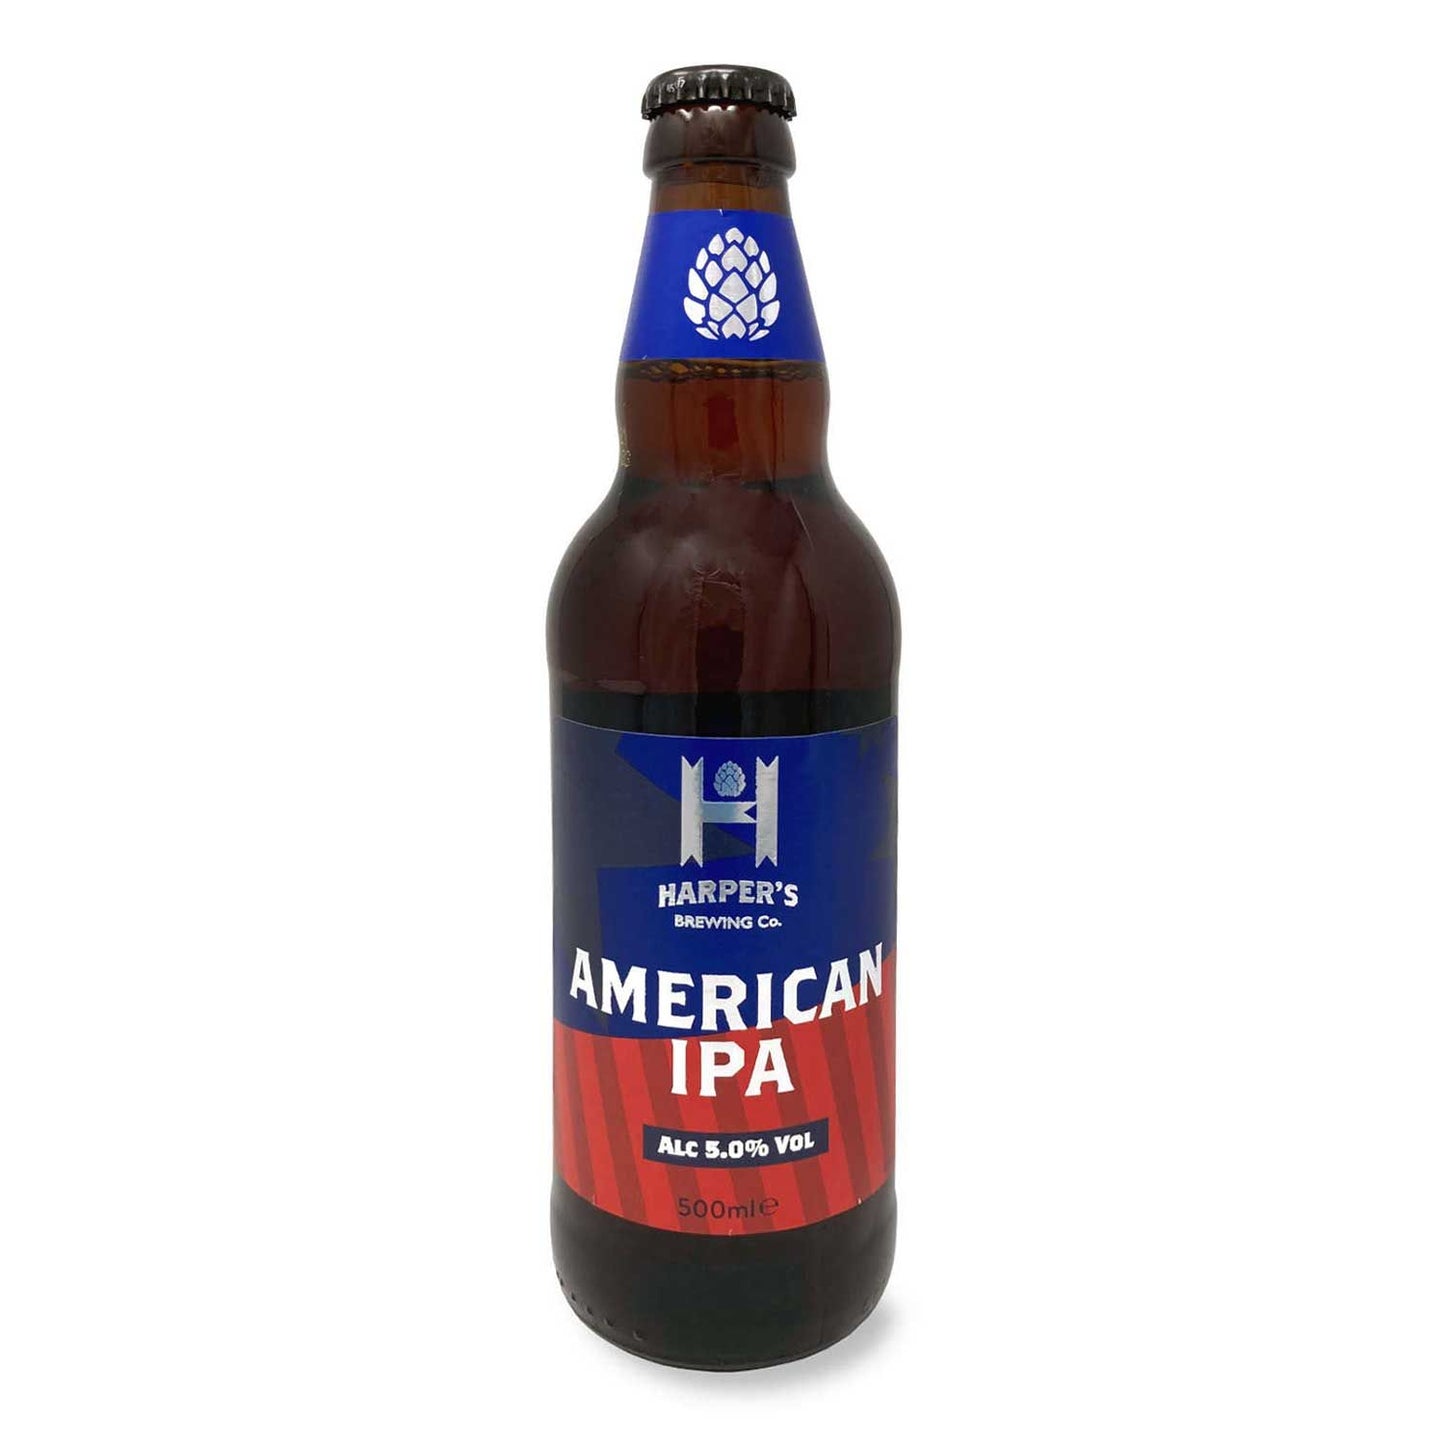 Harper's Brewing Co American IPA 500ml